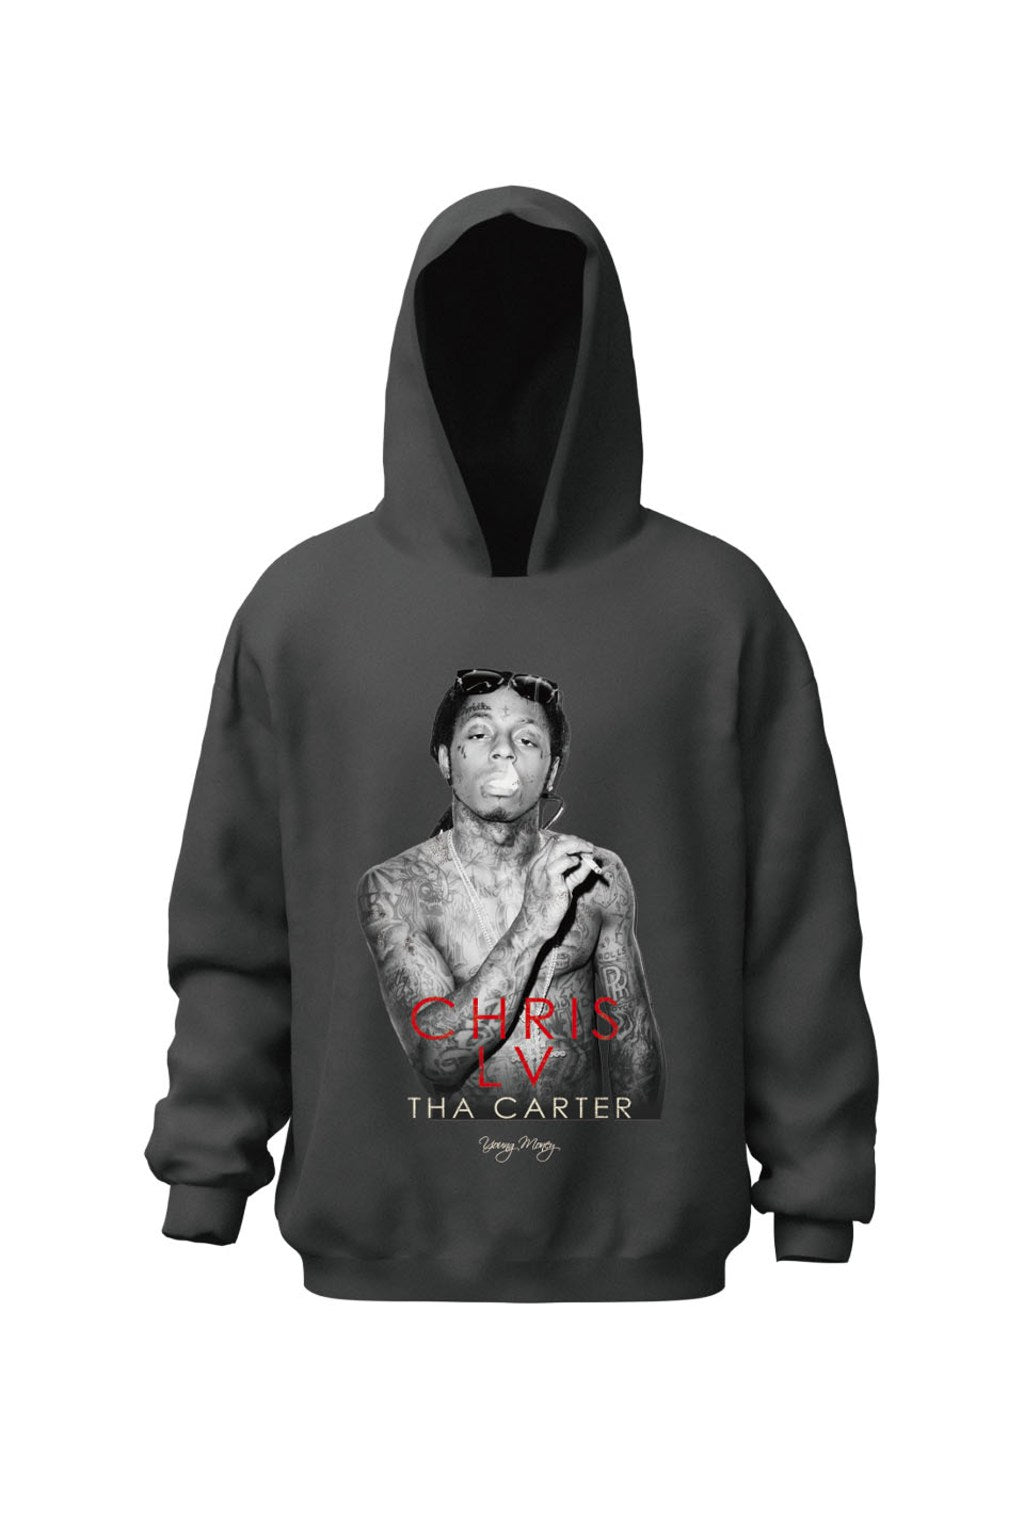 y50%OFF CHRISLV zCl Lil Wayne Hooded Sweater Xg[g t@bV qbvzbv _X 傫TCY  gh Y fB[X